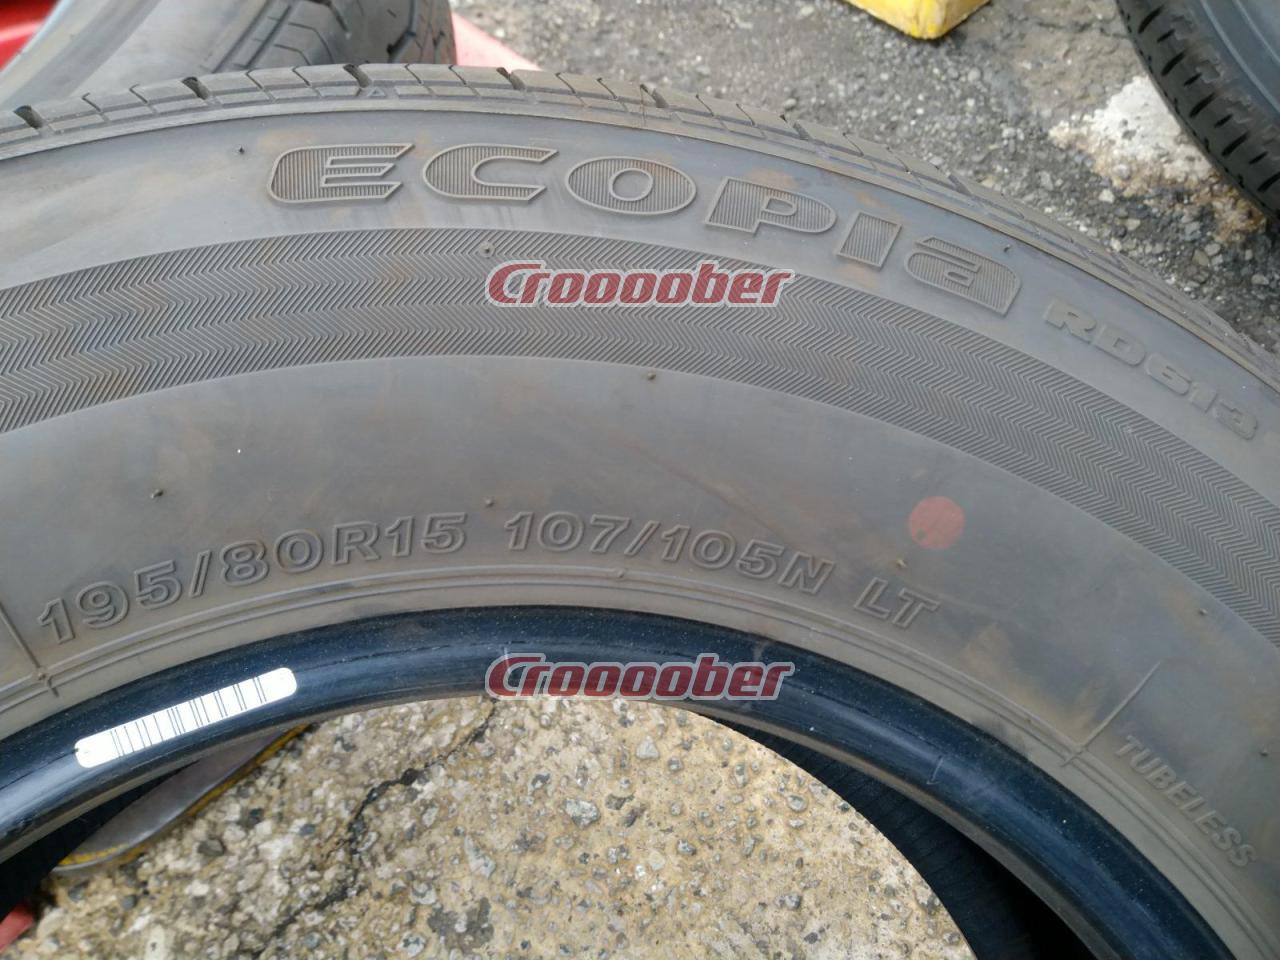 Bridgestone ECOPIa RD613 195 / 80R15 | 15 Inch Tire | Croooober